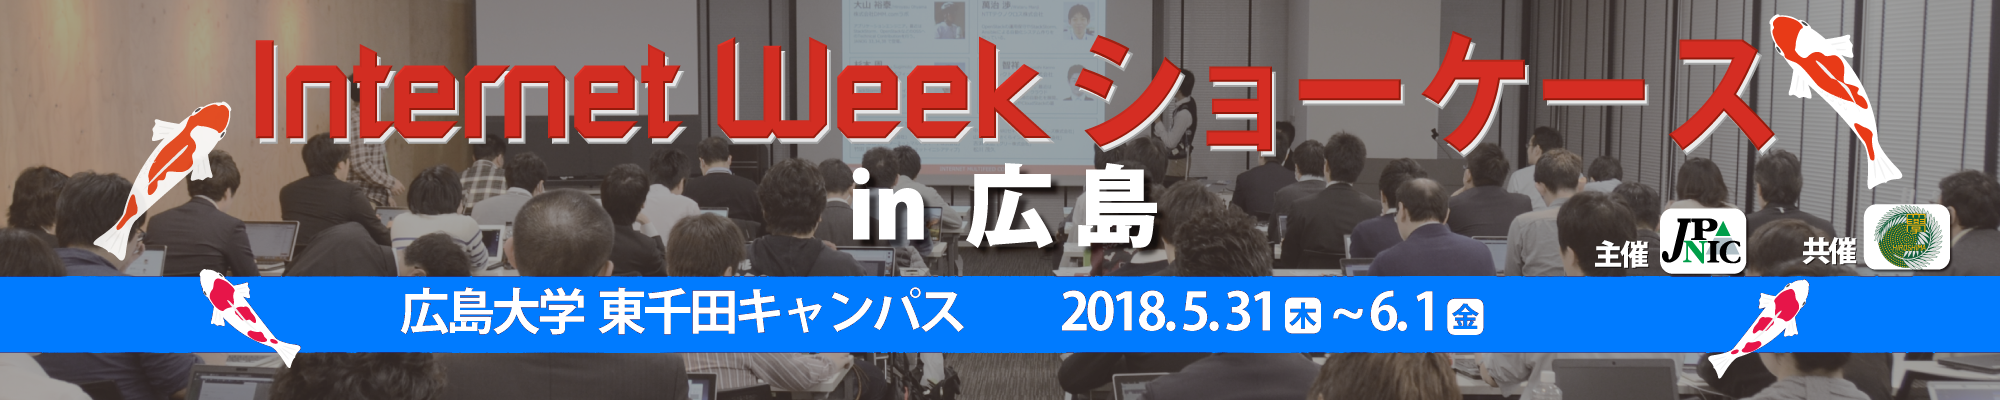 Internet Week ショーケース in 広島